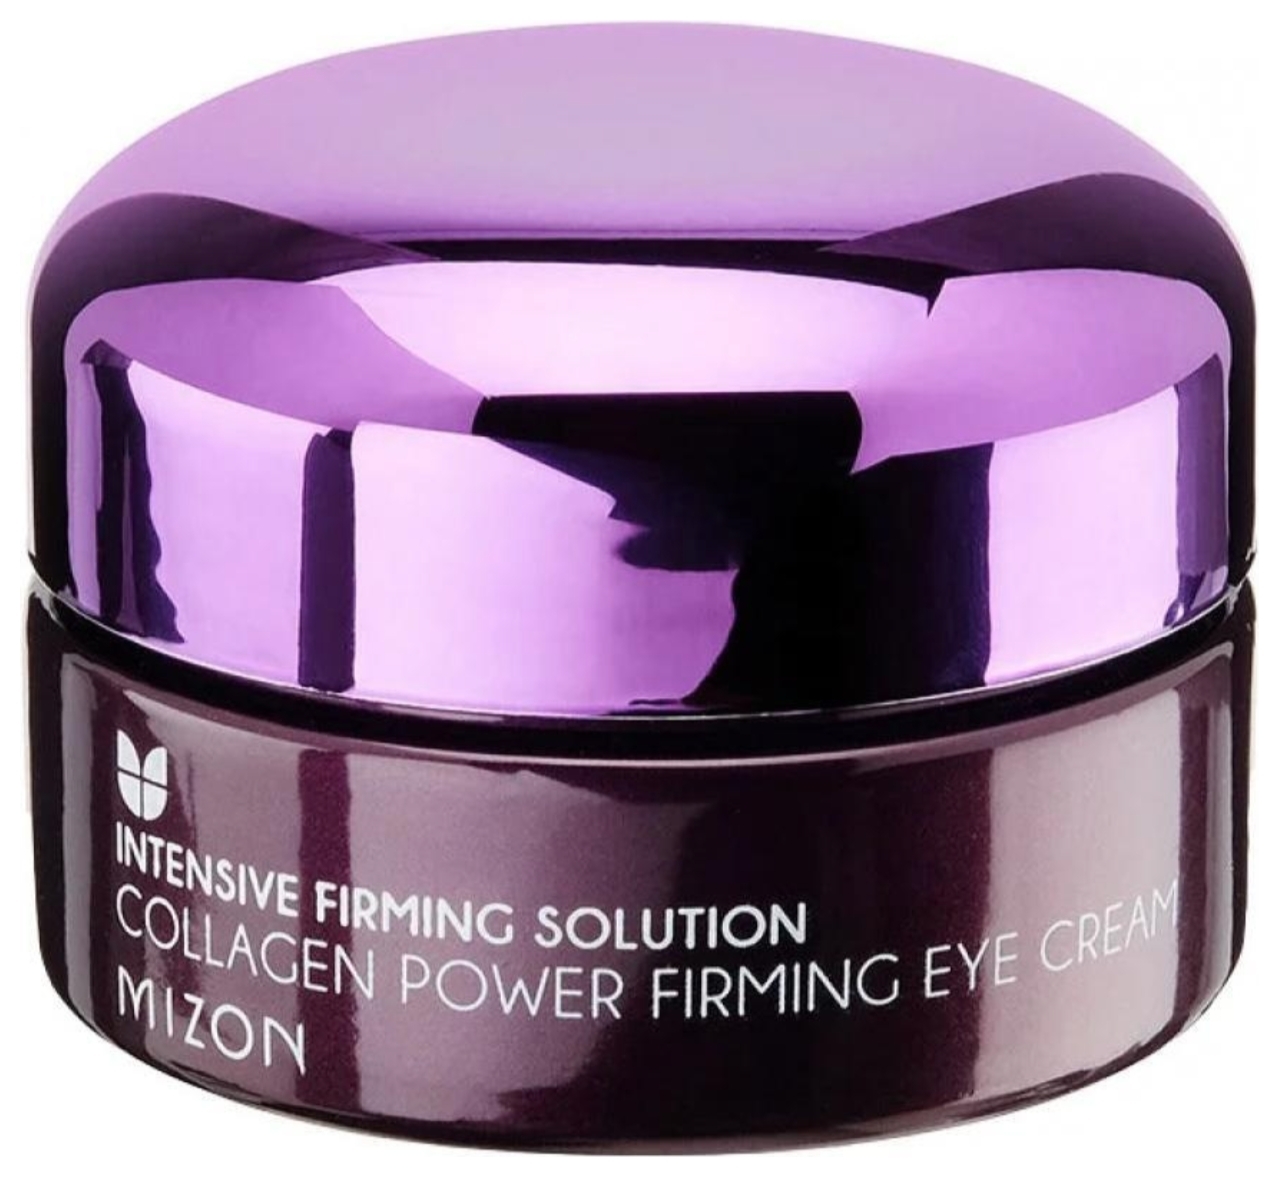 Коллагеновый крем для глаз Collagen Power Firming Eye Cream